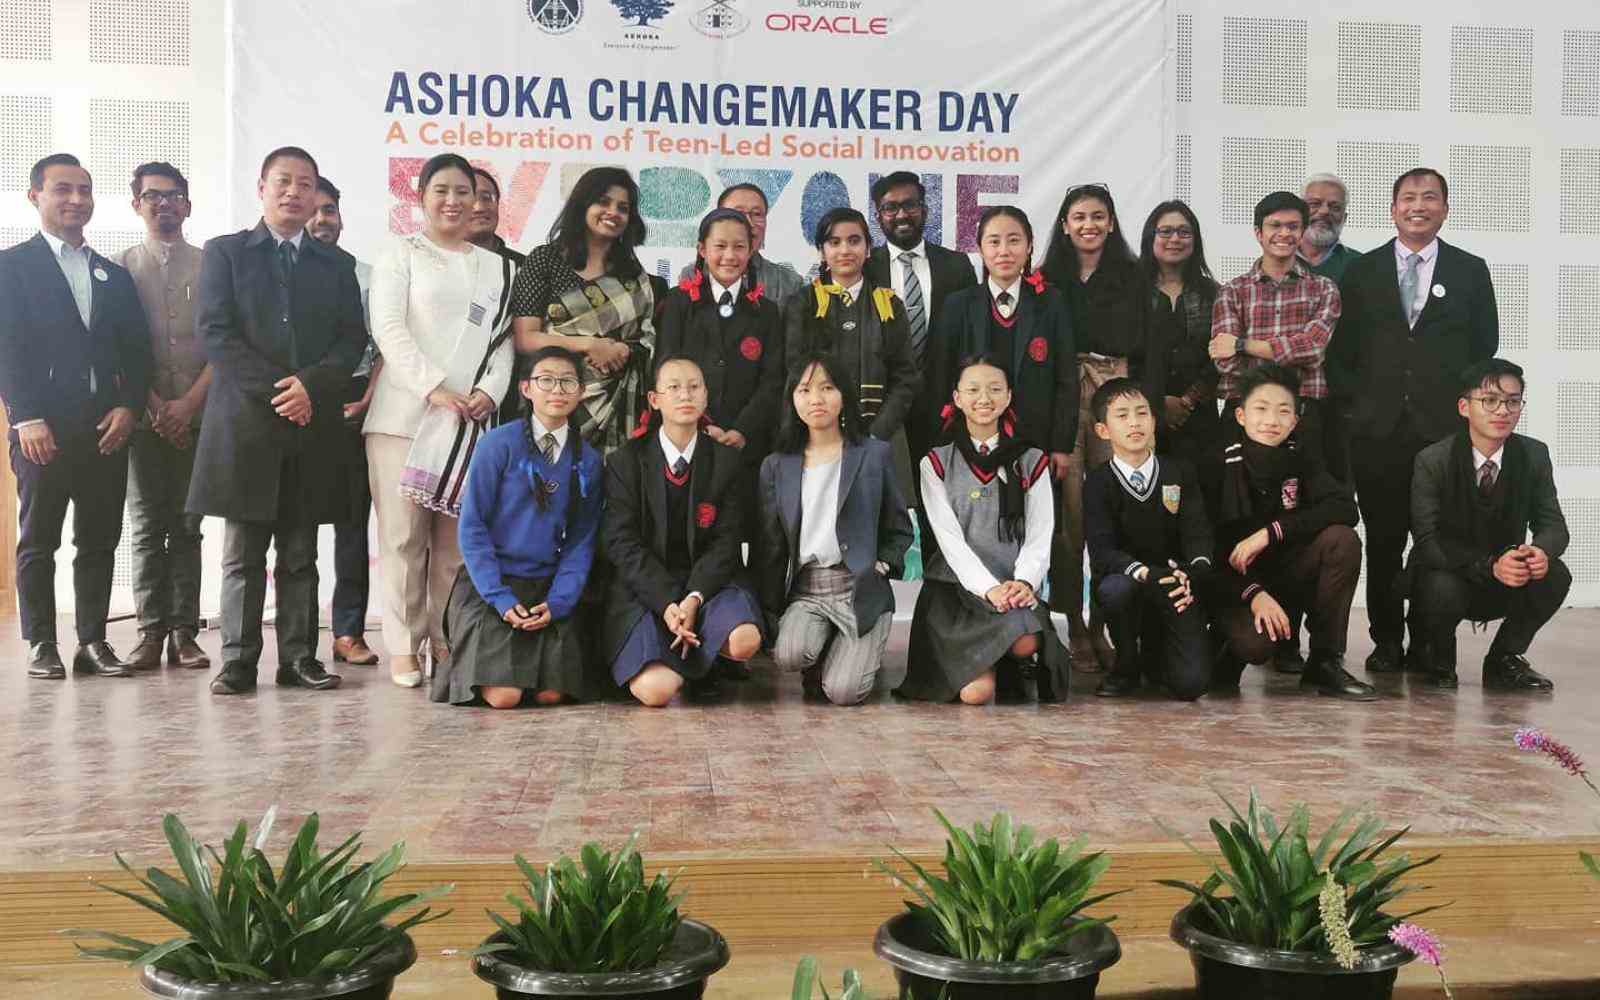 Changemaker Day in Kohima